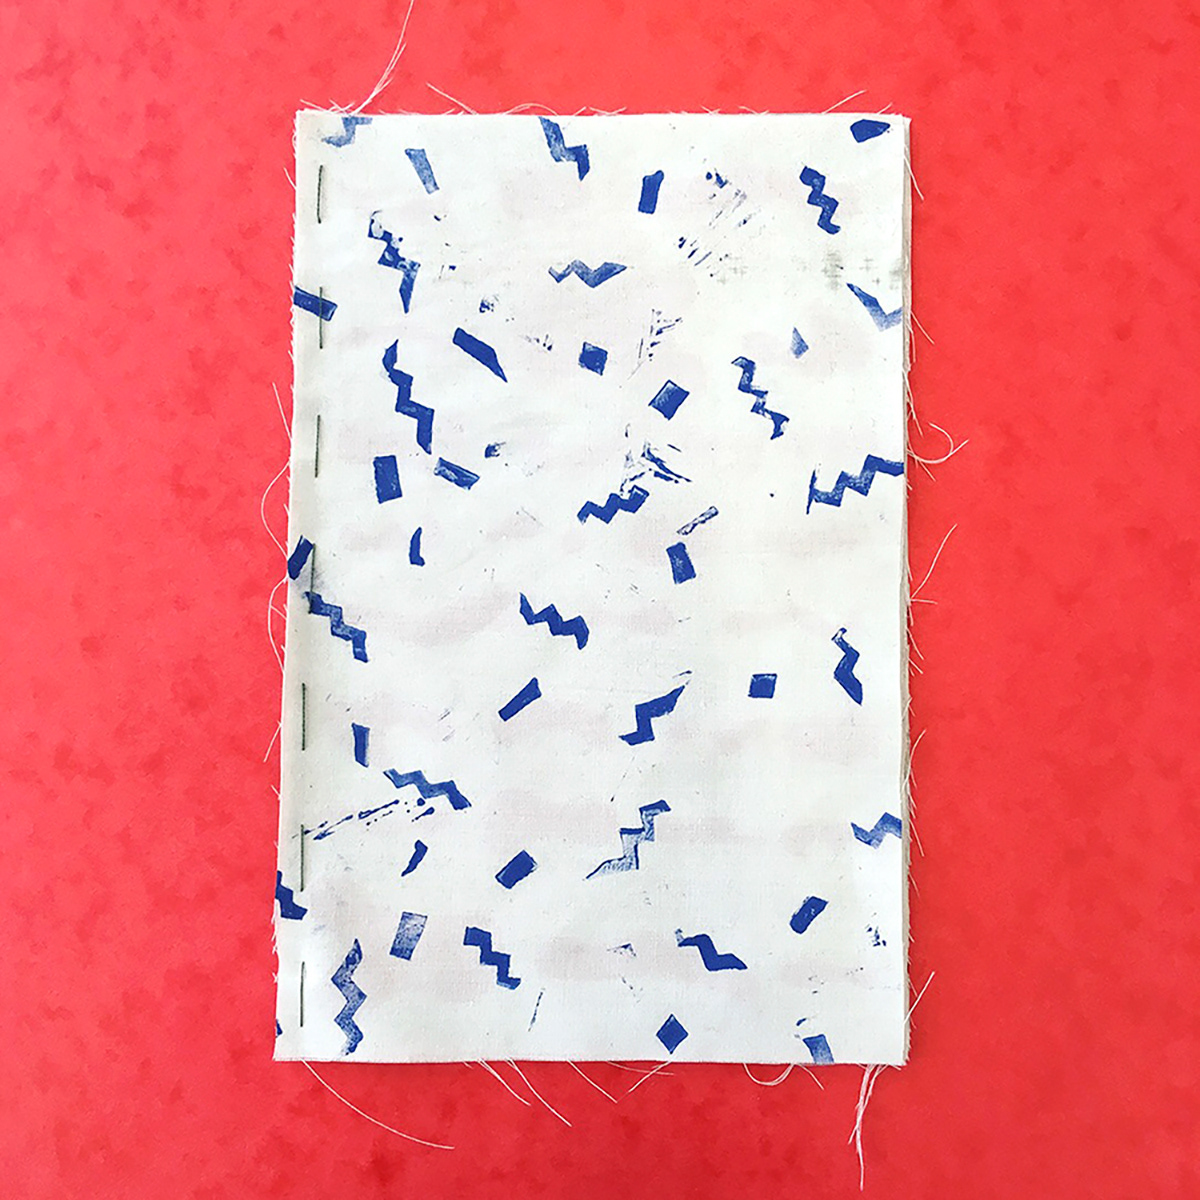 art process design crafts   print silk screen pattern recycling fabric plastic